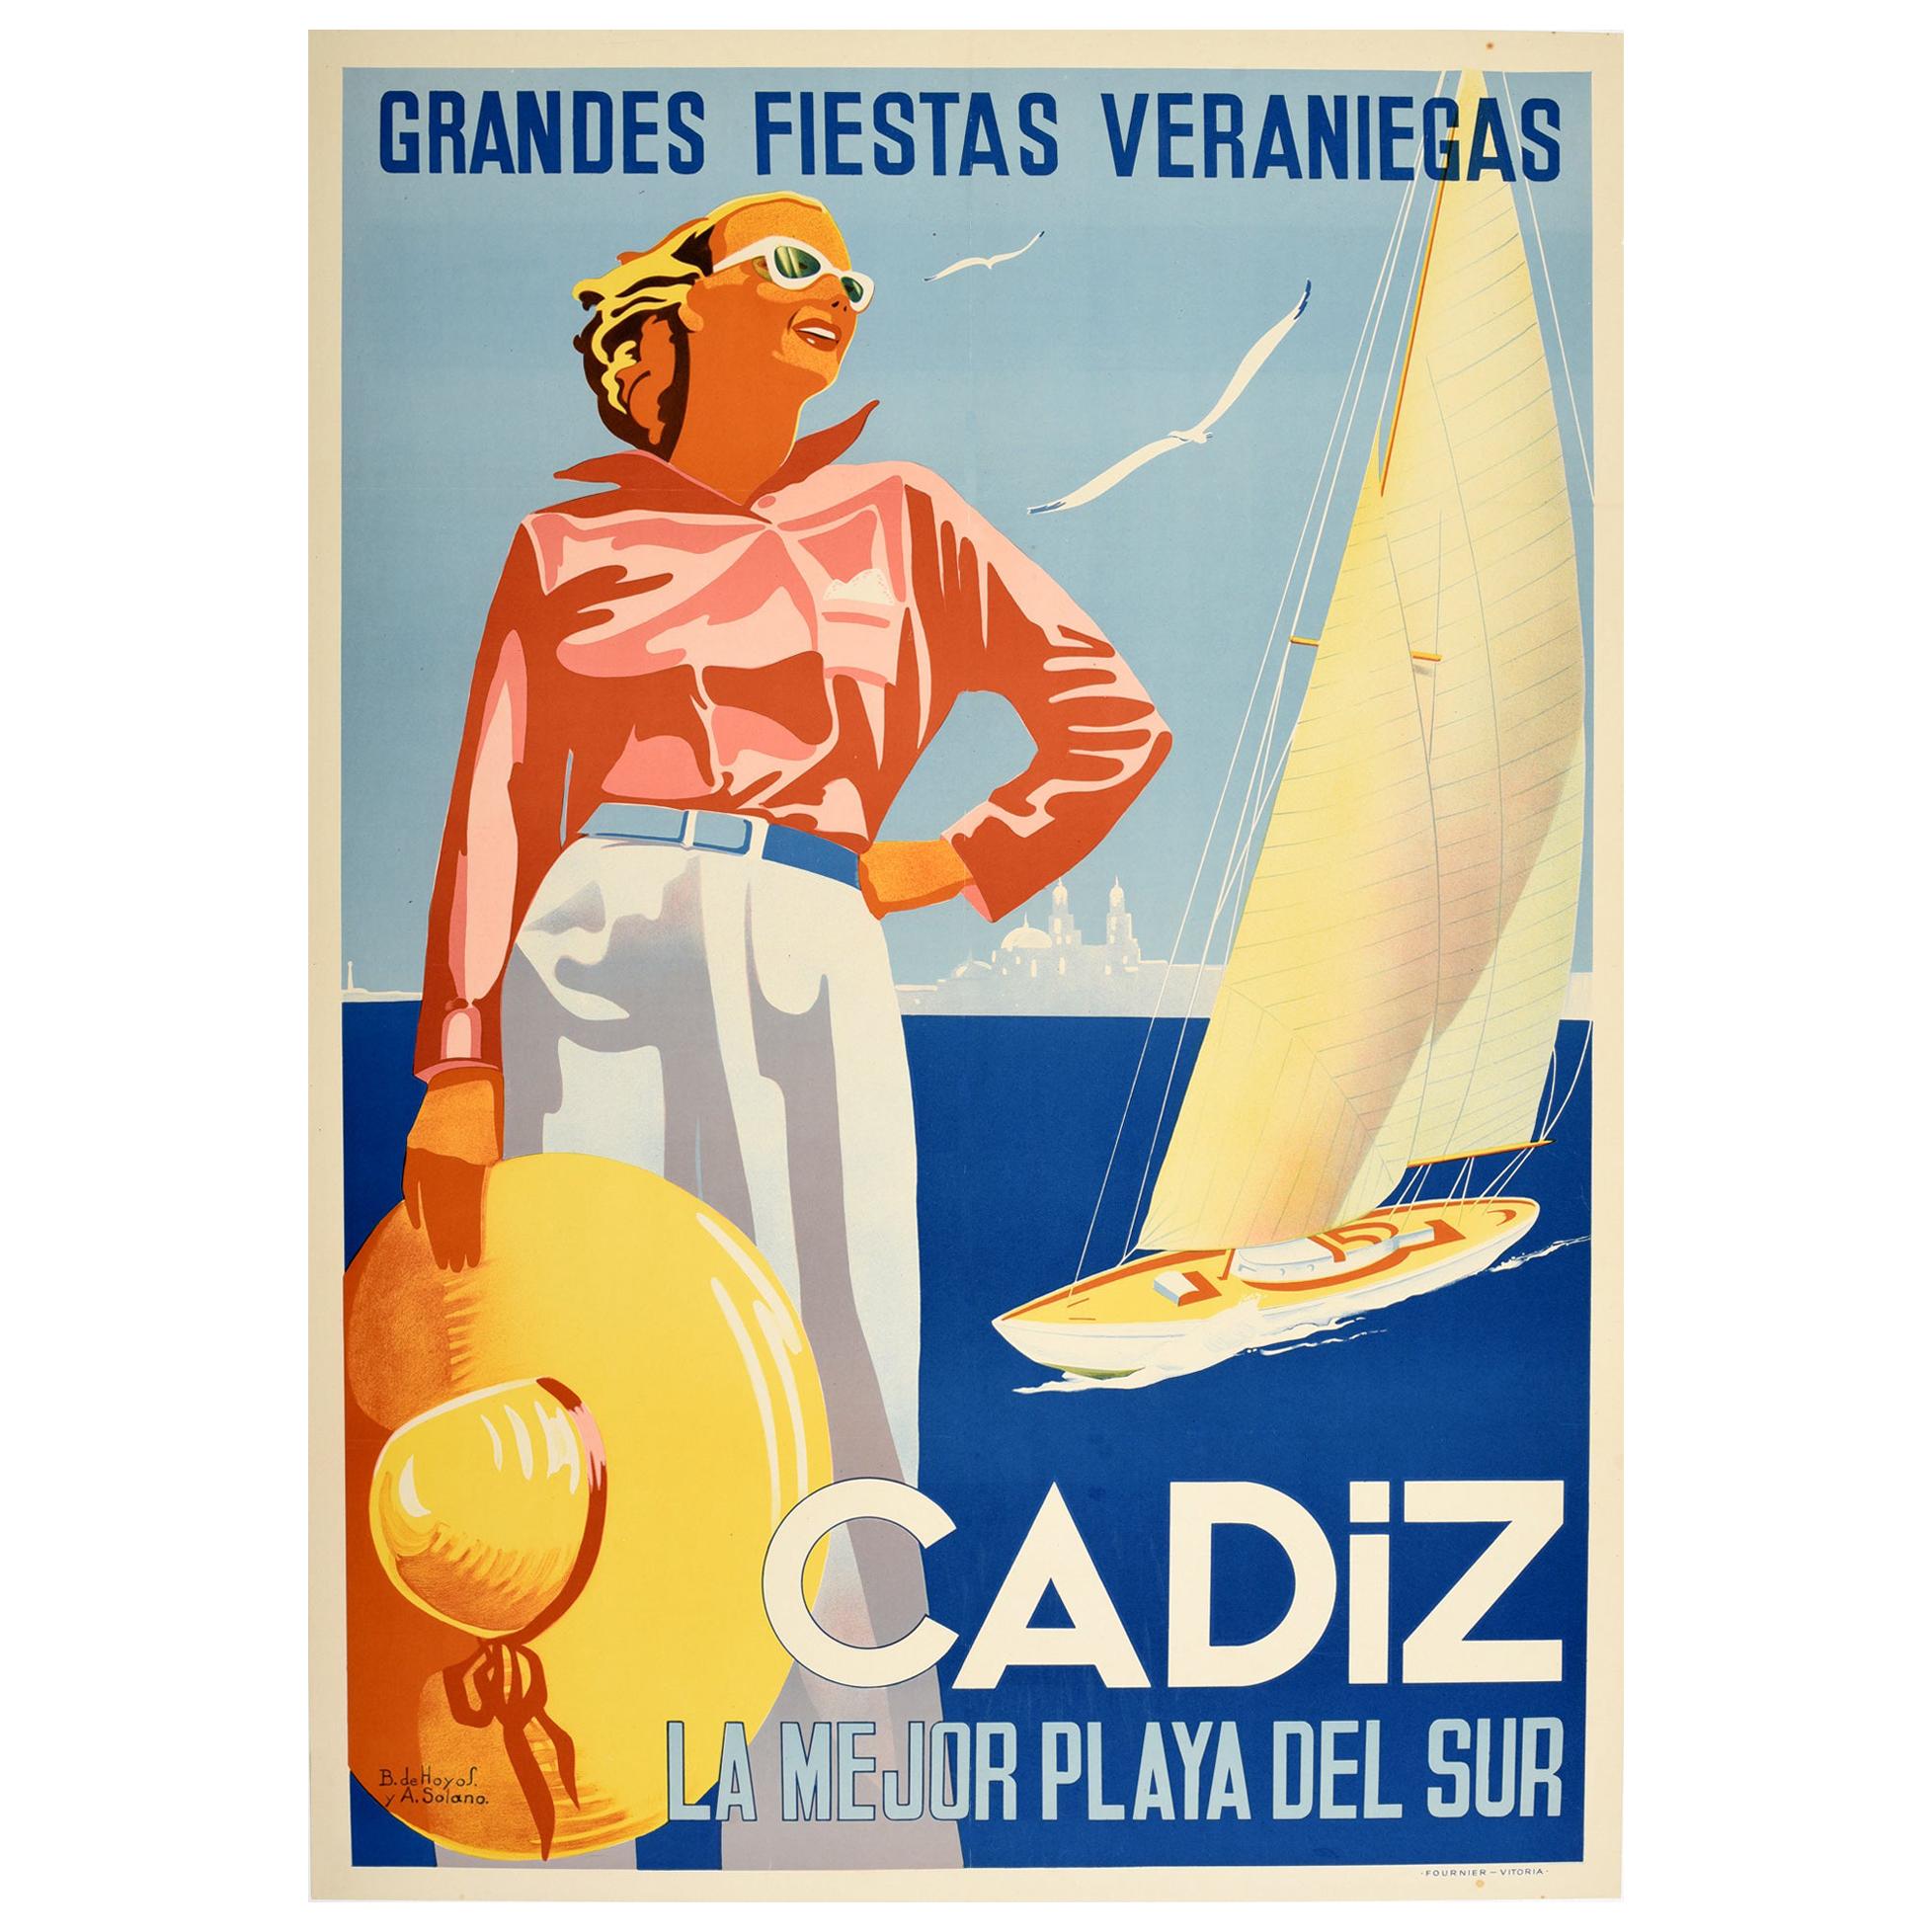 Original Vintage Travel Poster Cadiz Beach Sailing Yacht Summer Holiday Vacation